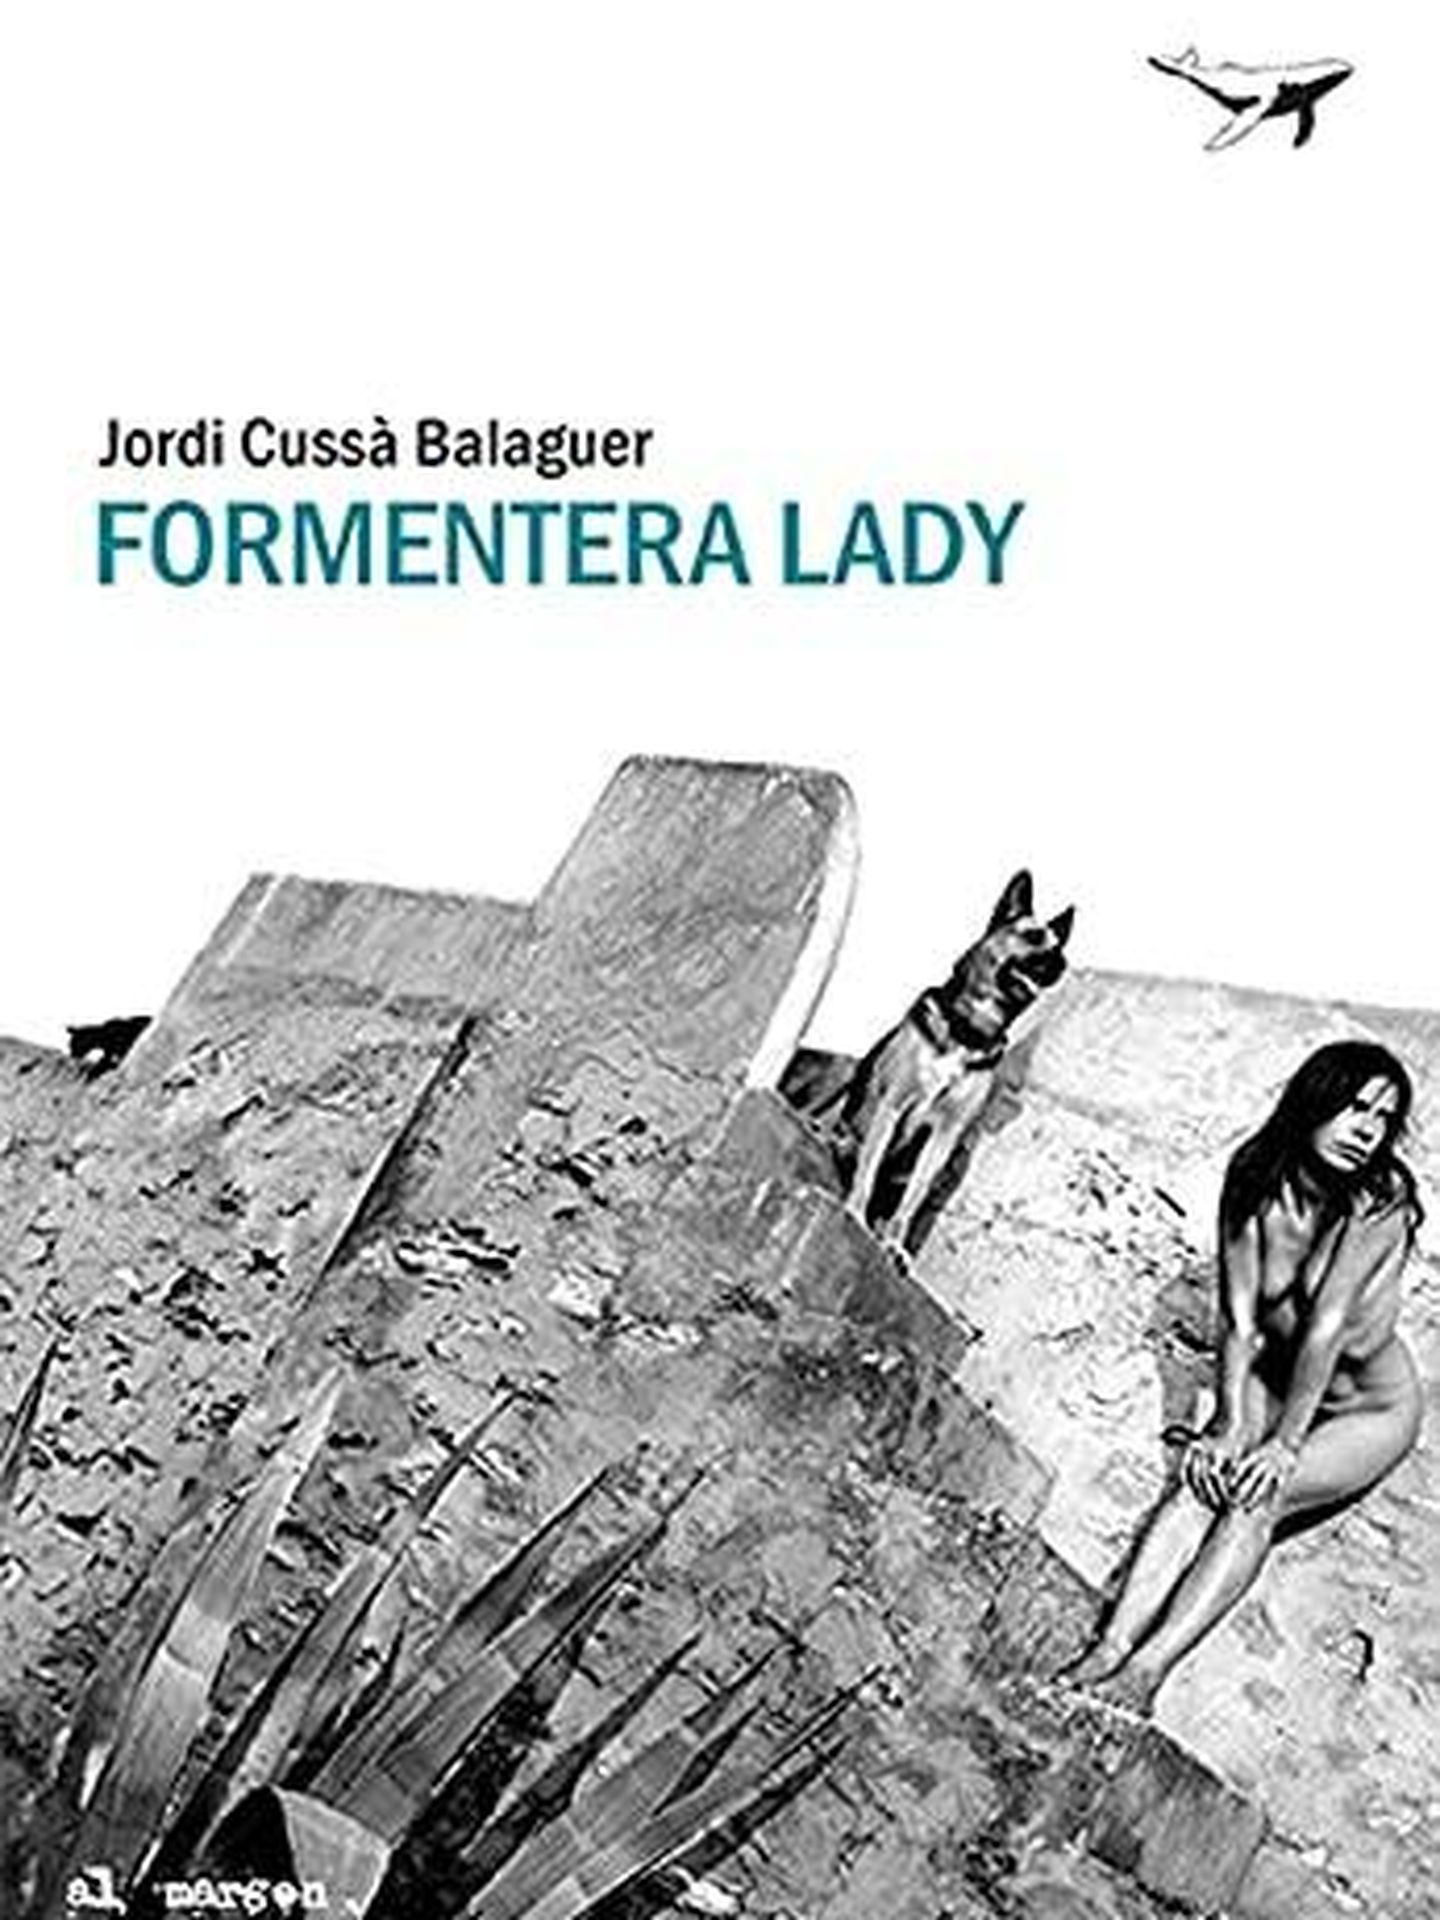 'Formentera Lady'.